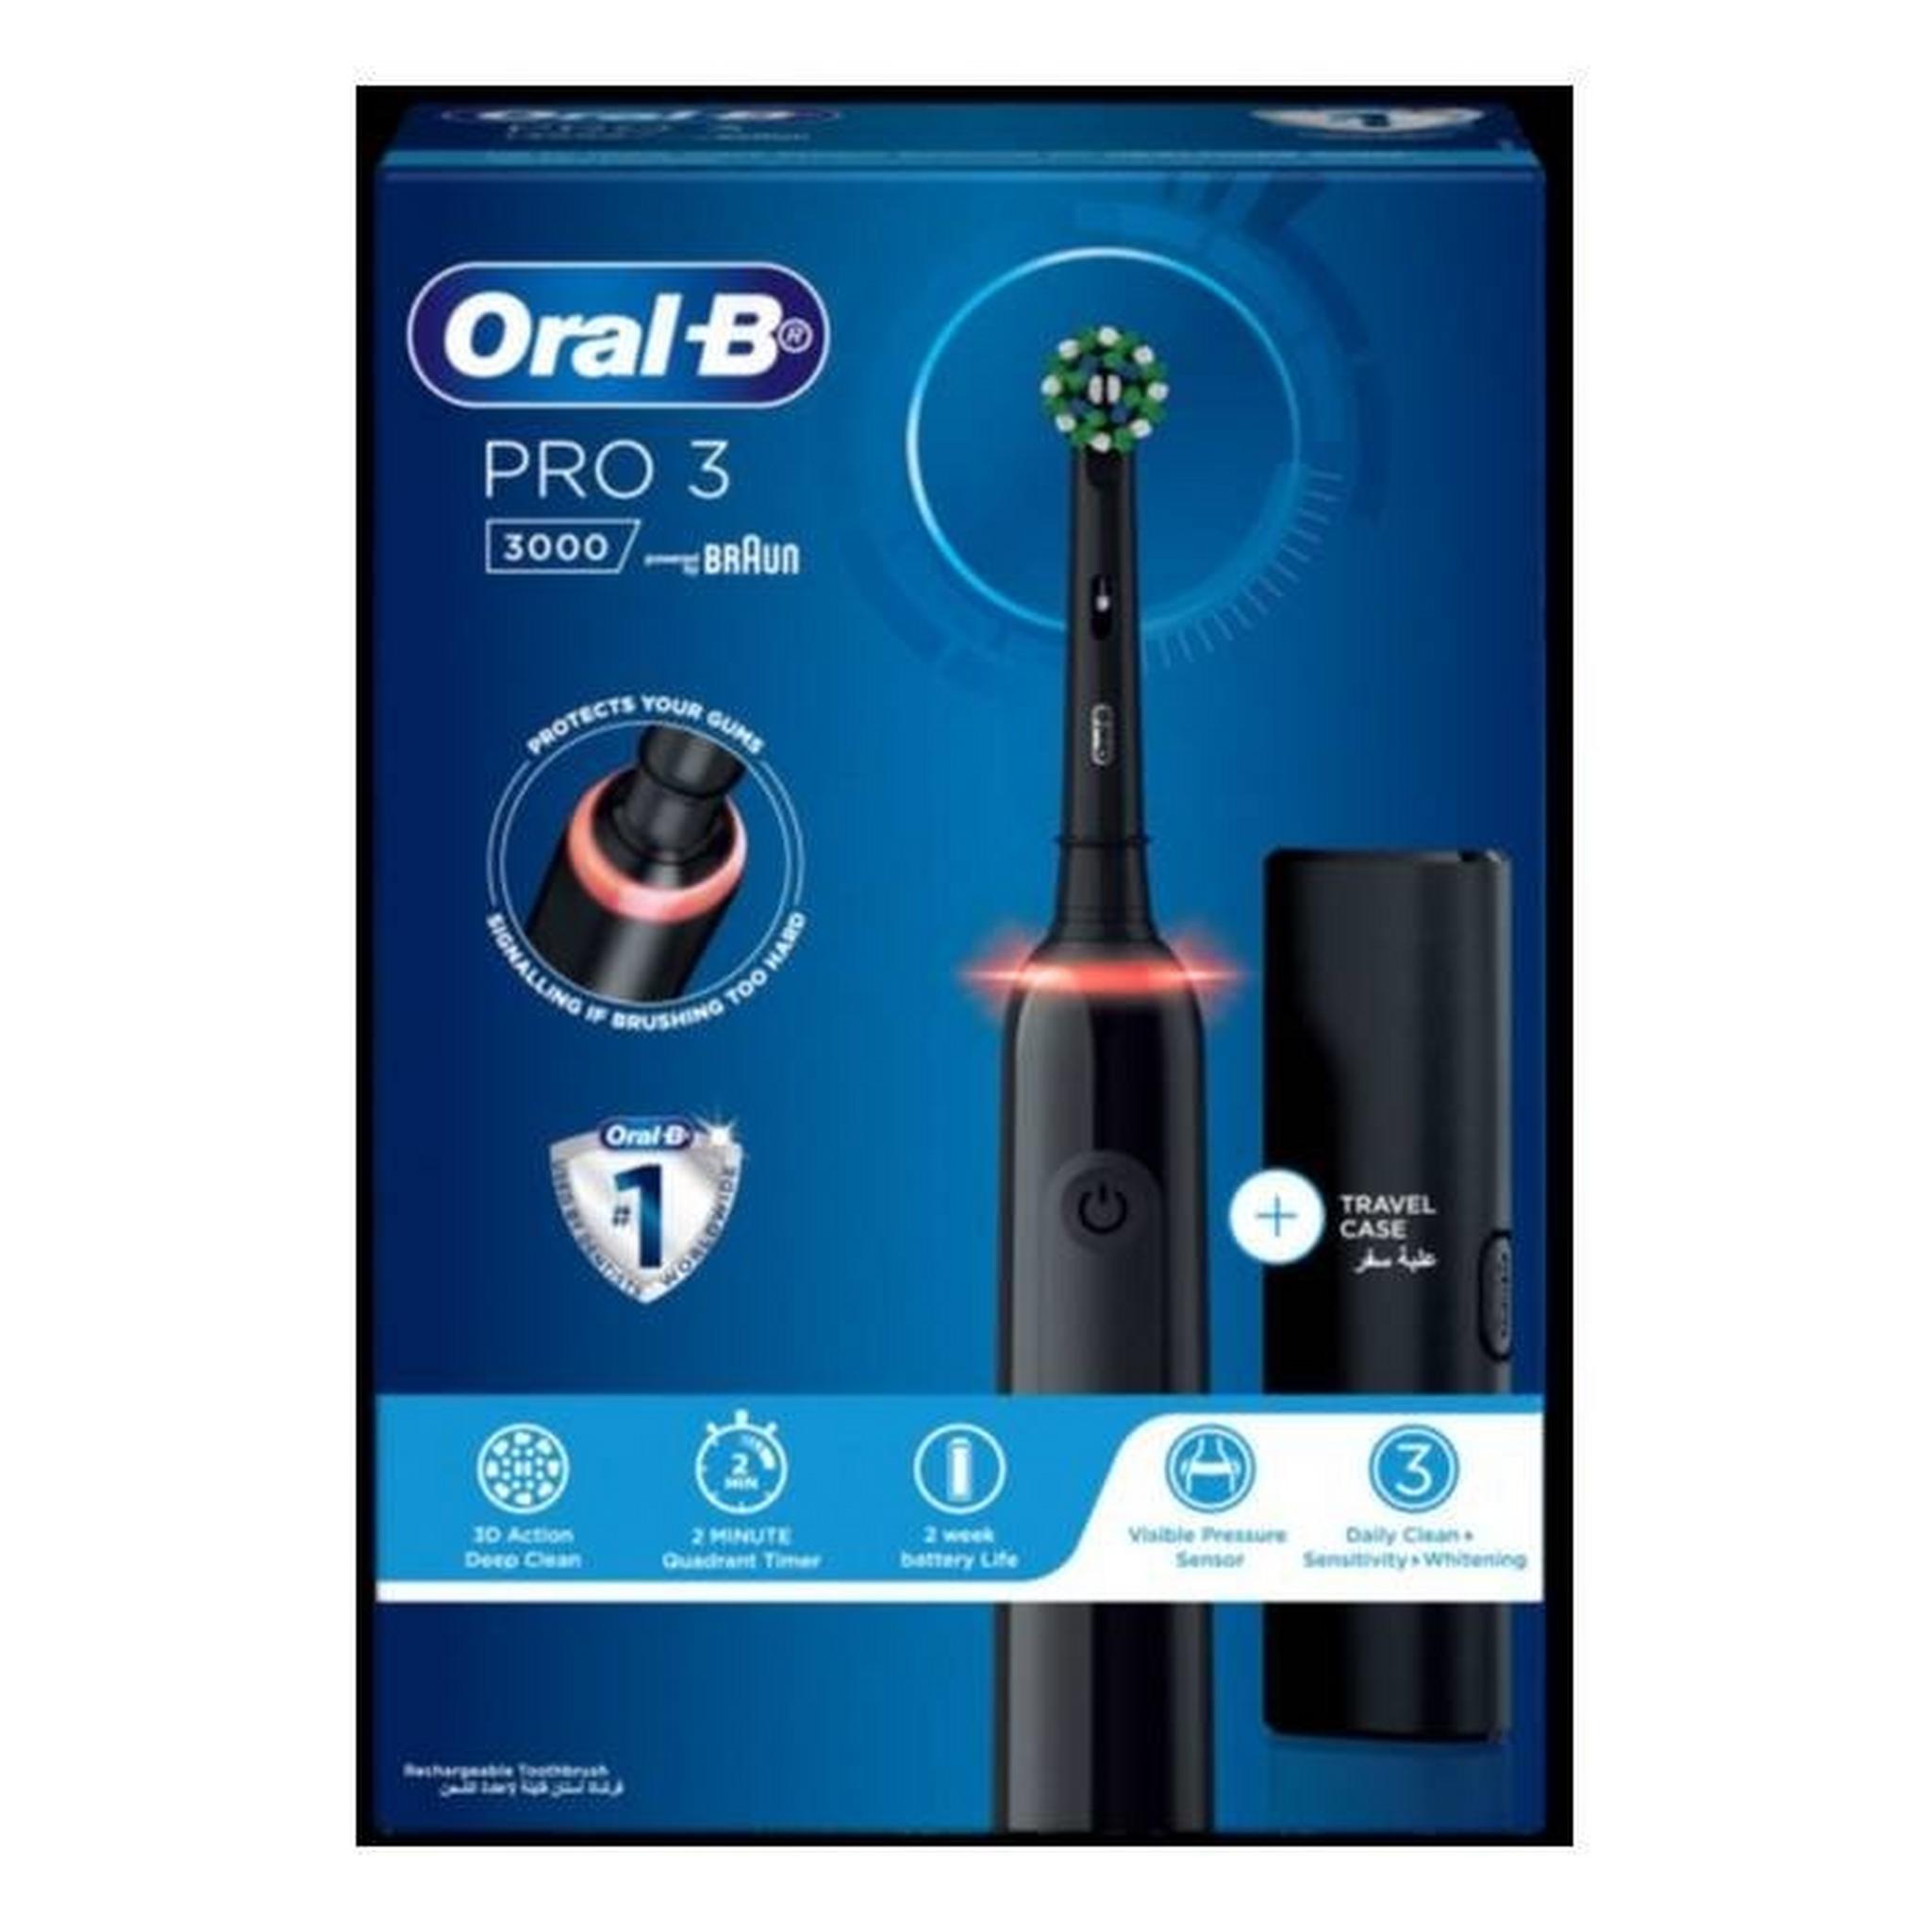 Oral-B Pro 3 Electric Toothbrush – Black